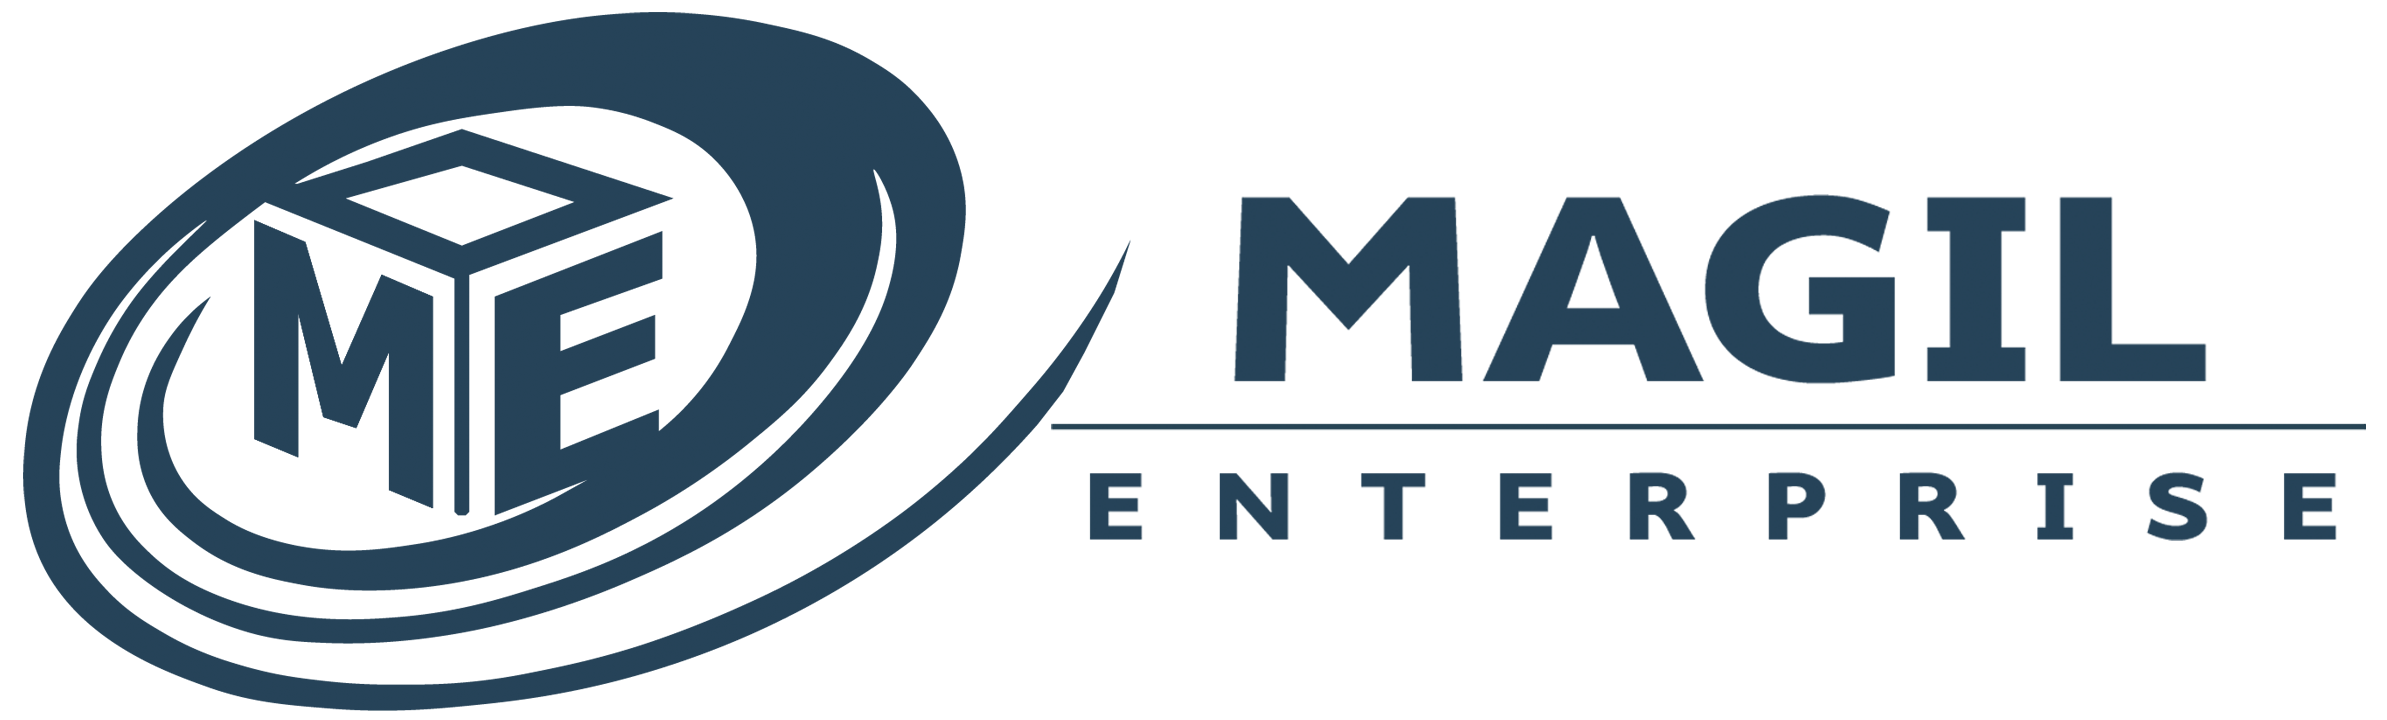 Magil Enterprise Store